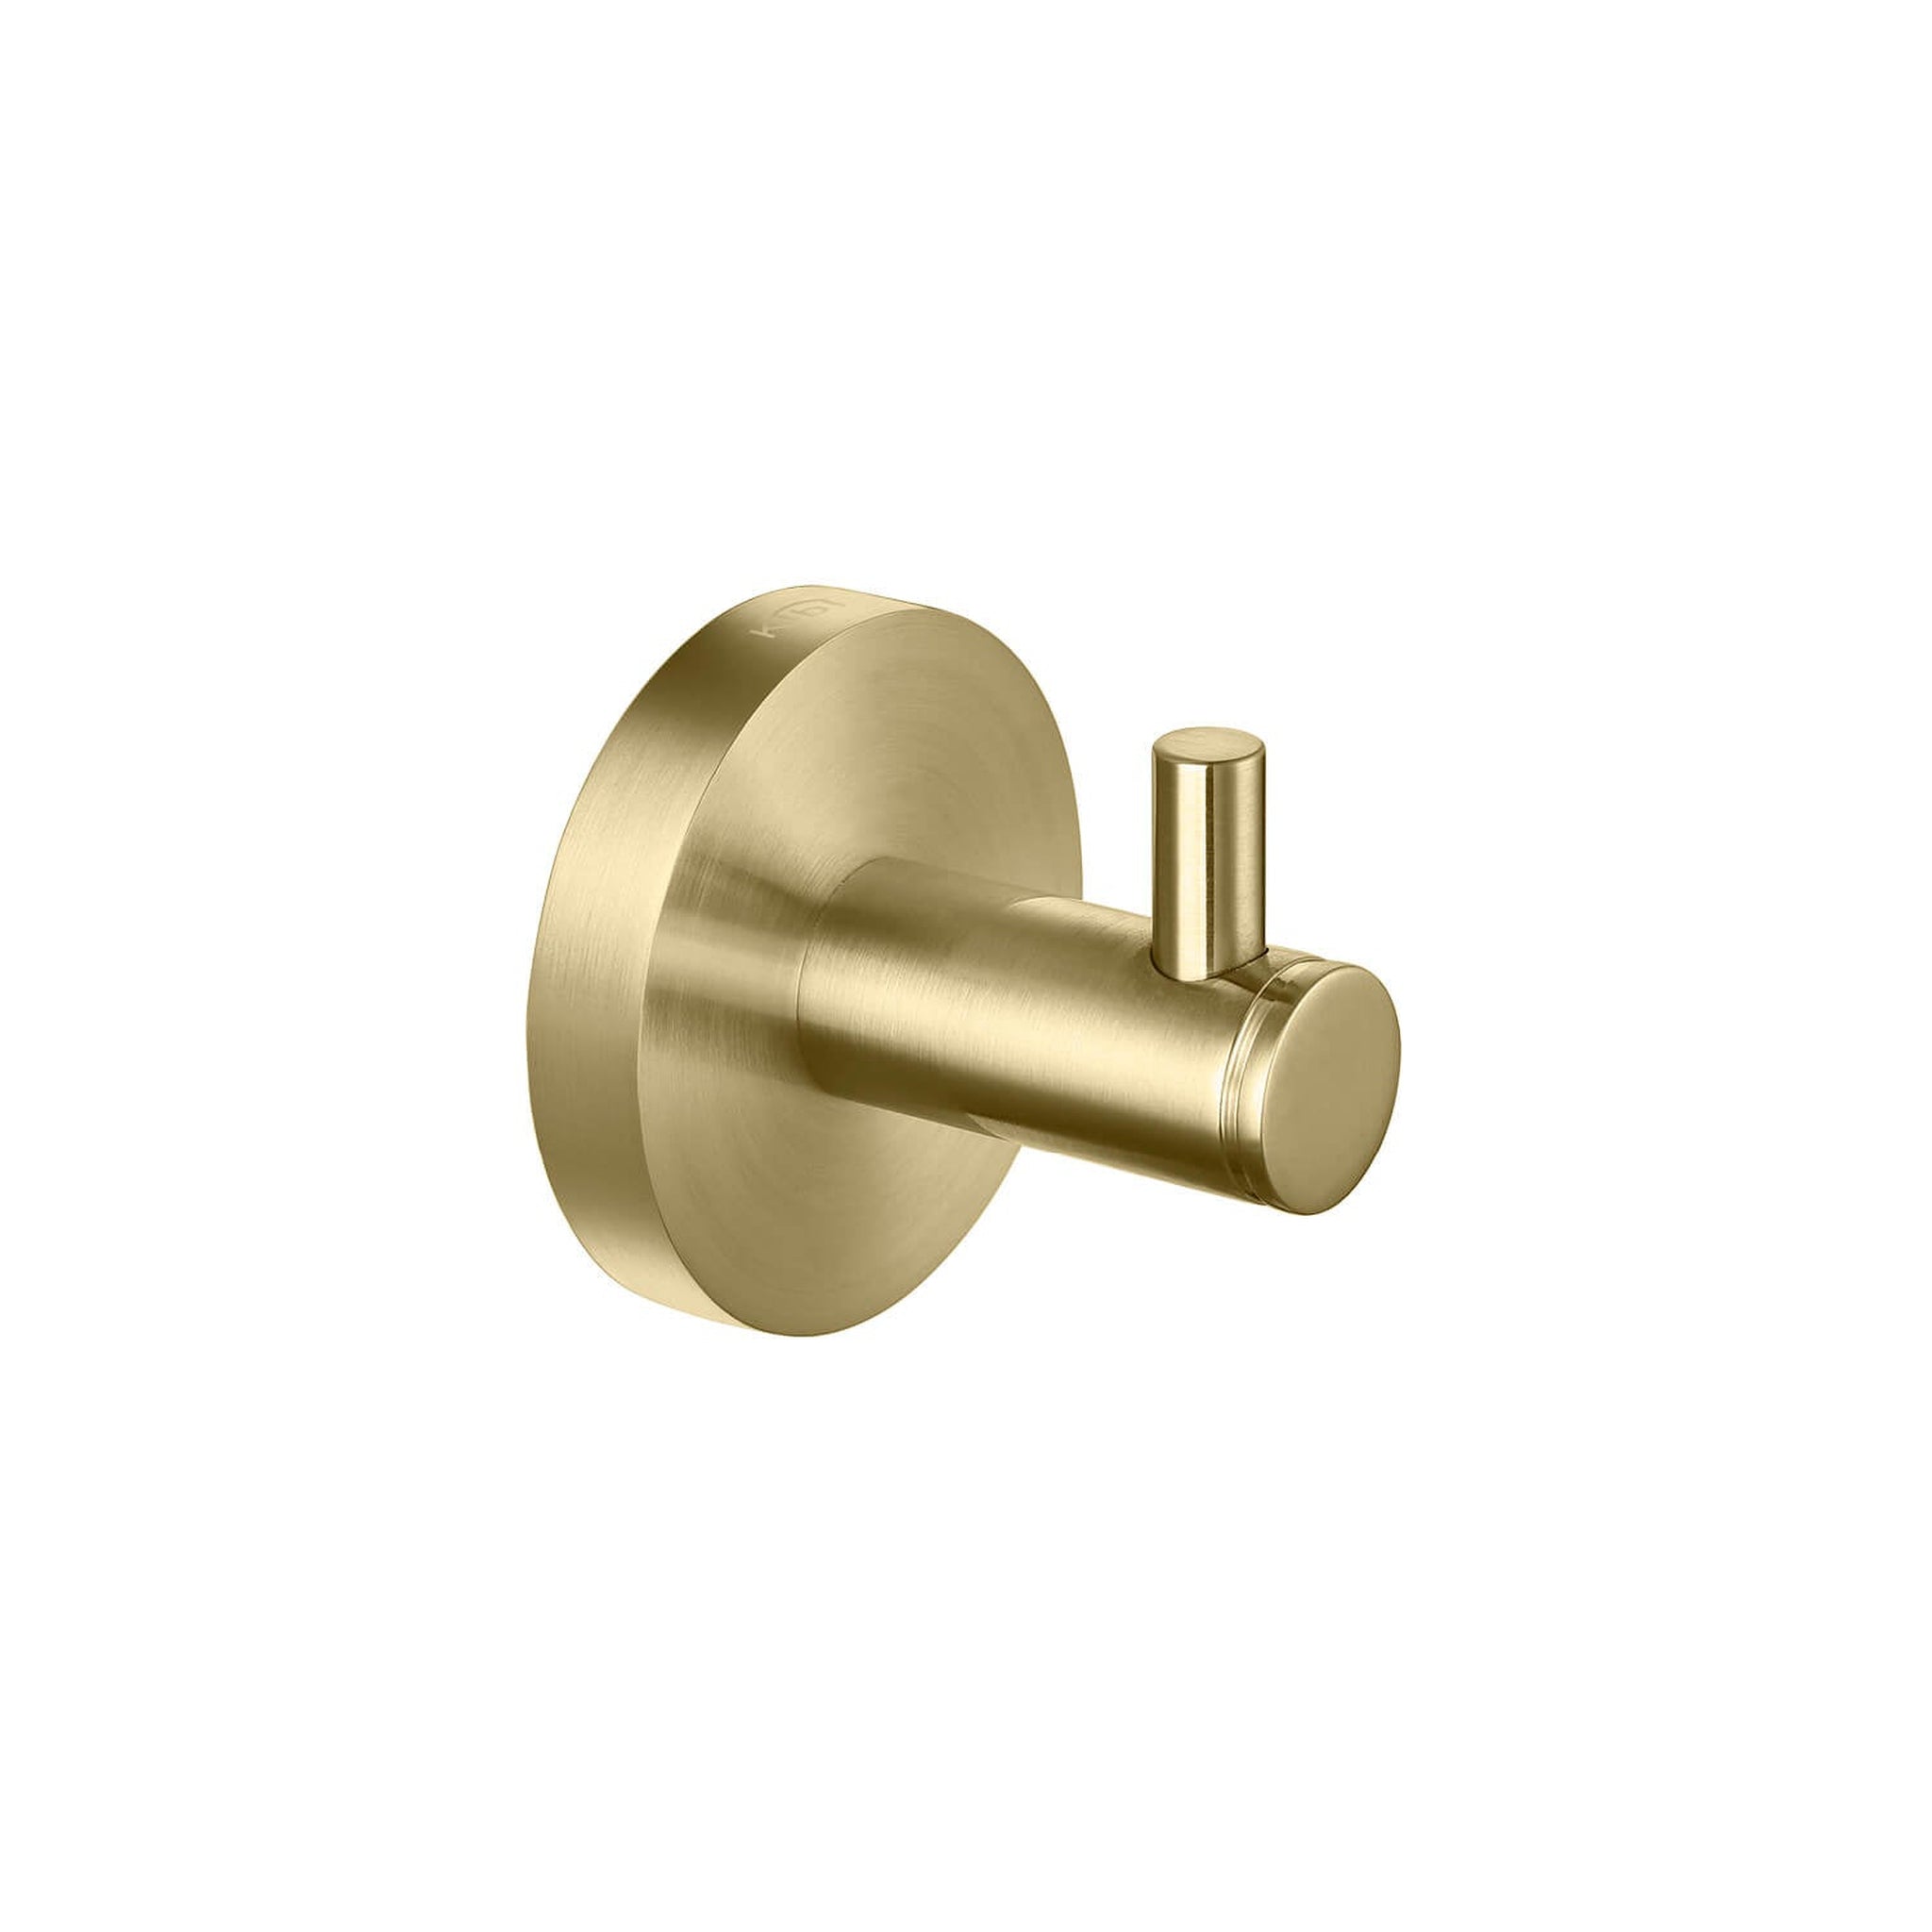 KIBI, KIBI Circular Brass Bathroom Robe Hook in Brushed Gold Finish